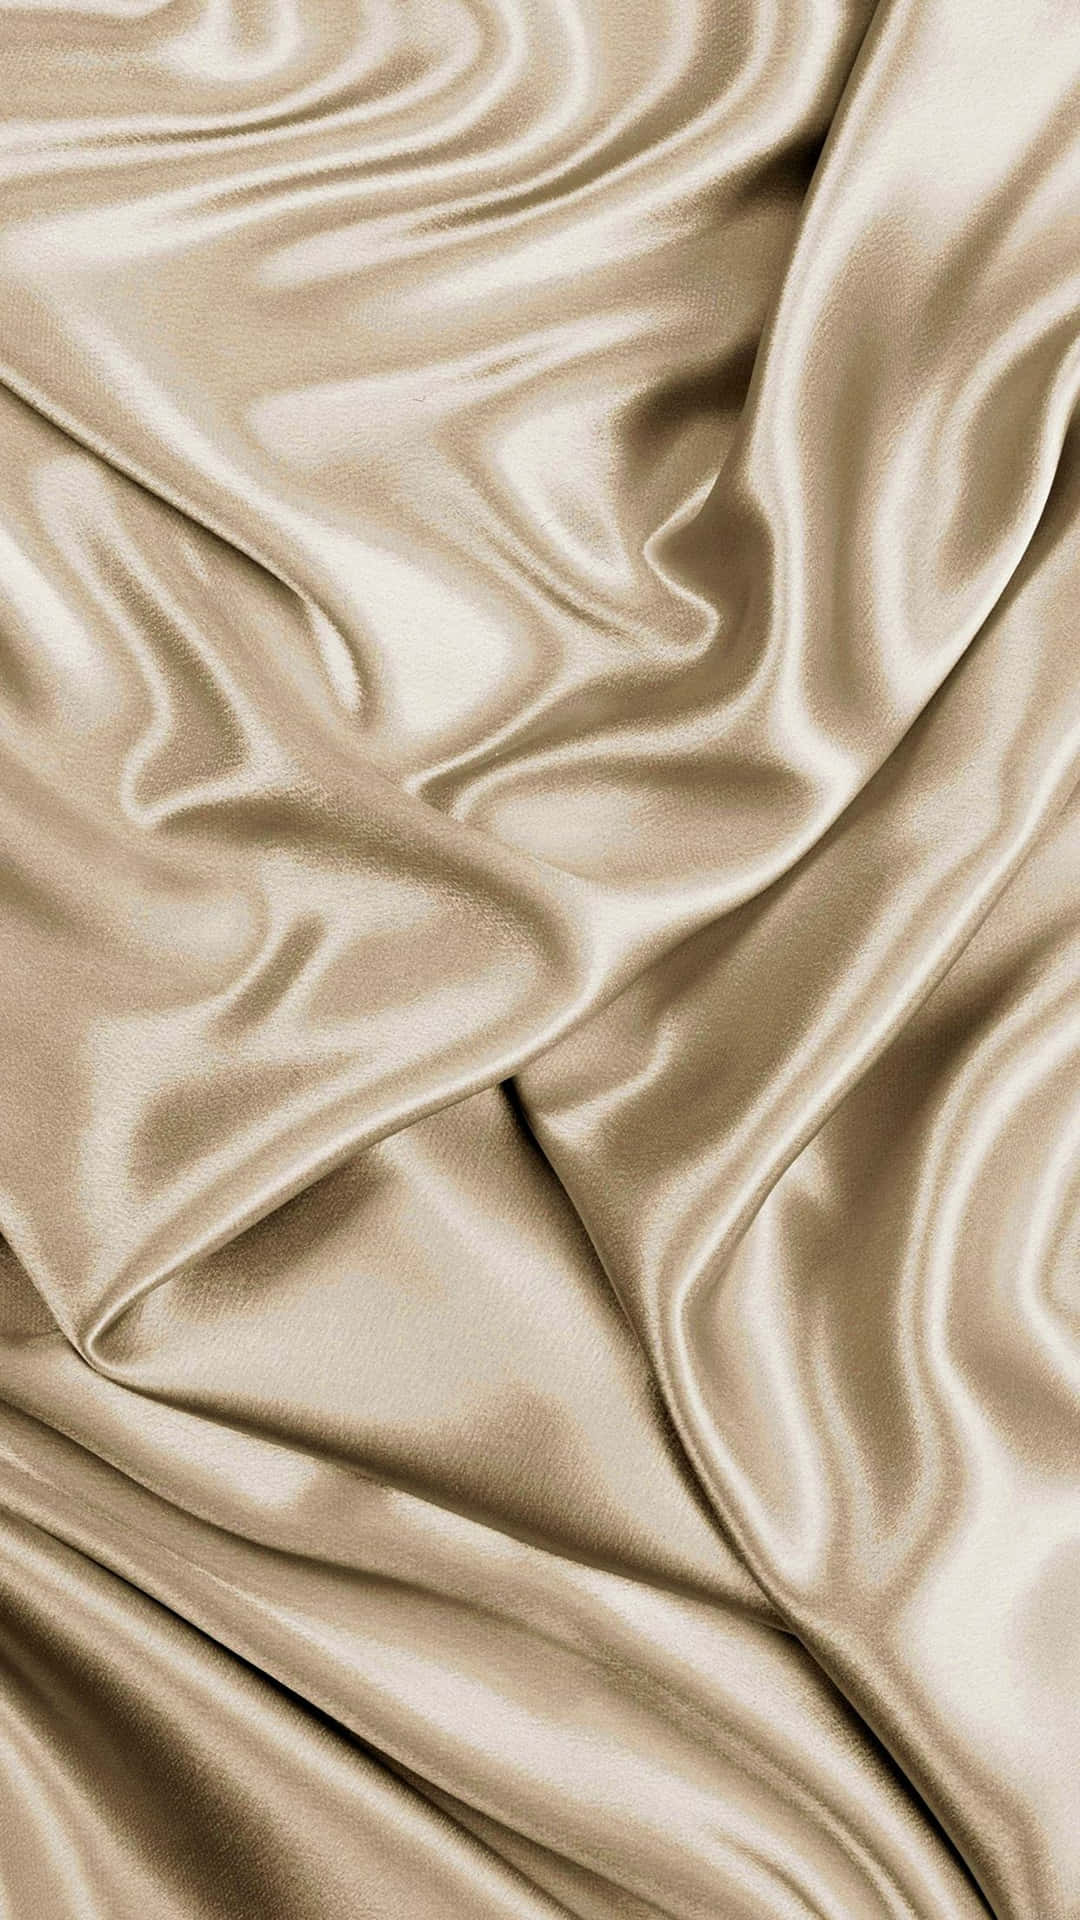 A Close Up Of A Beige Satin Fabric Wallpaper